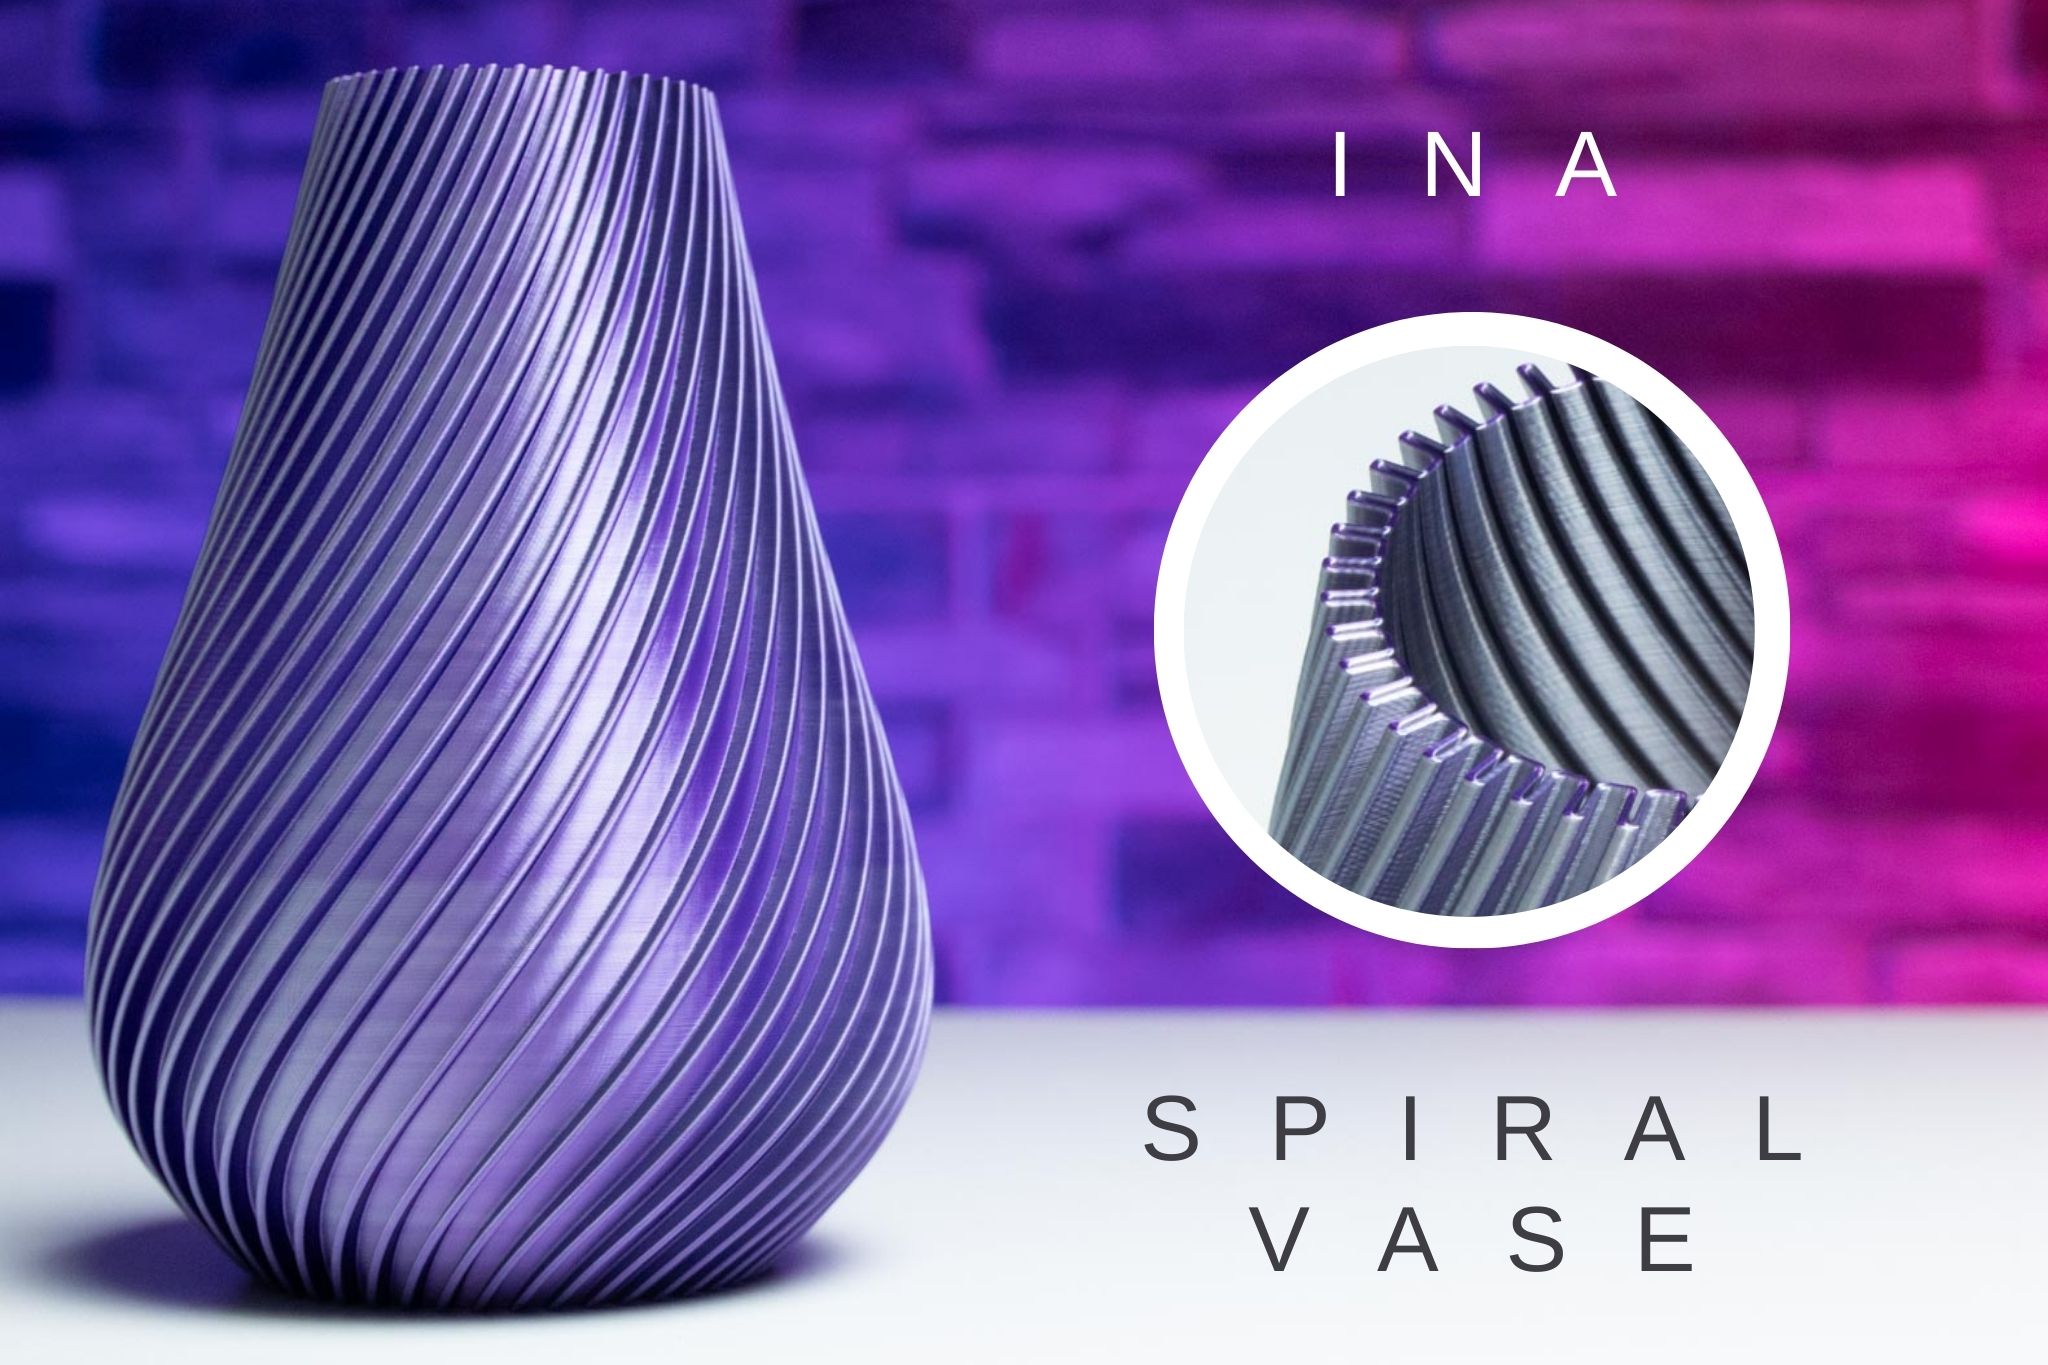 3D Printed Spiral Vase INA